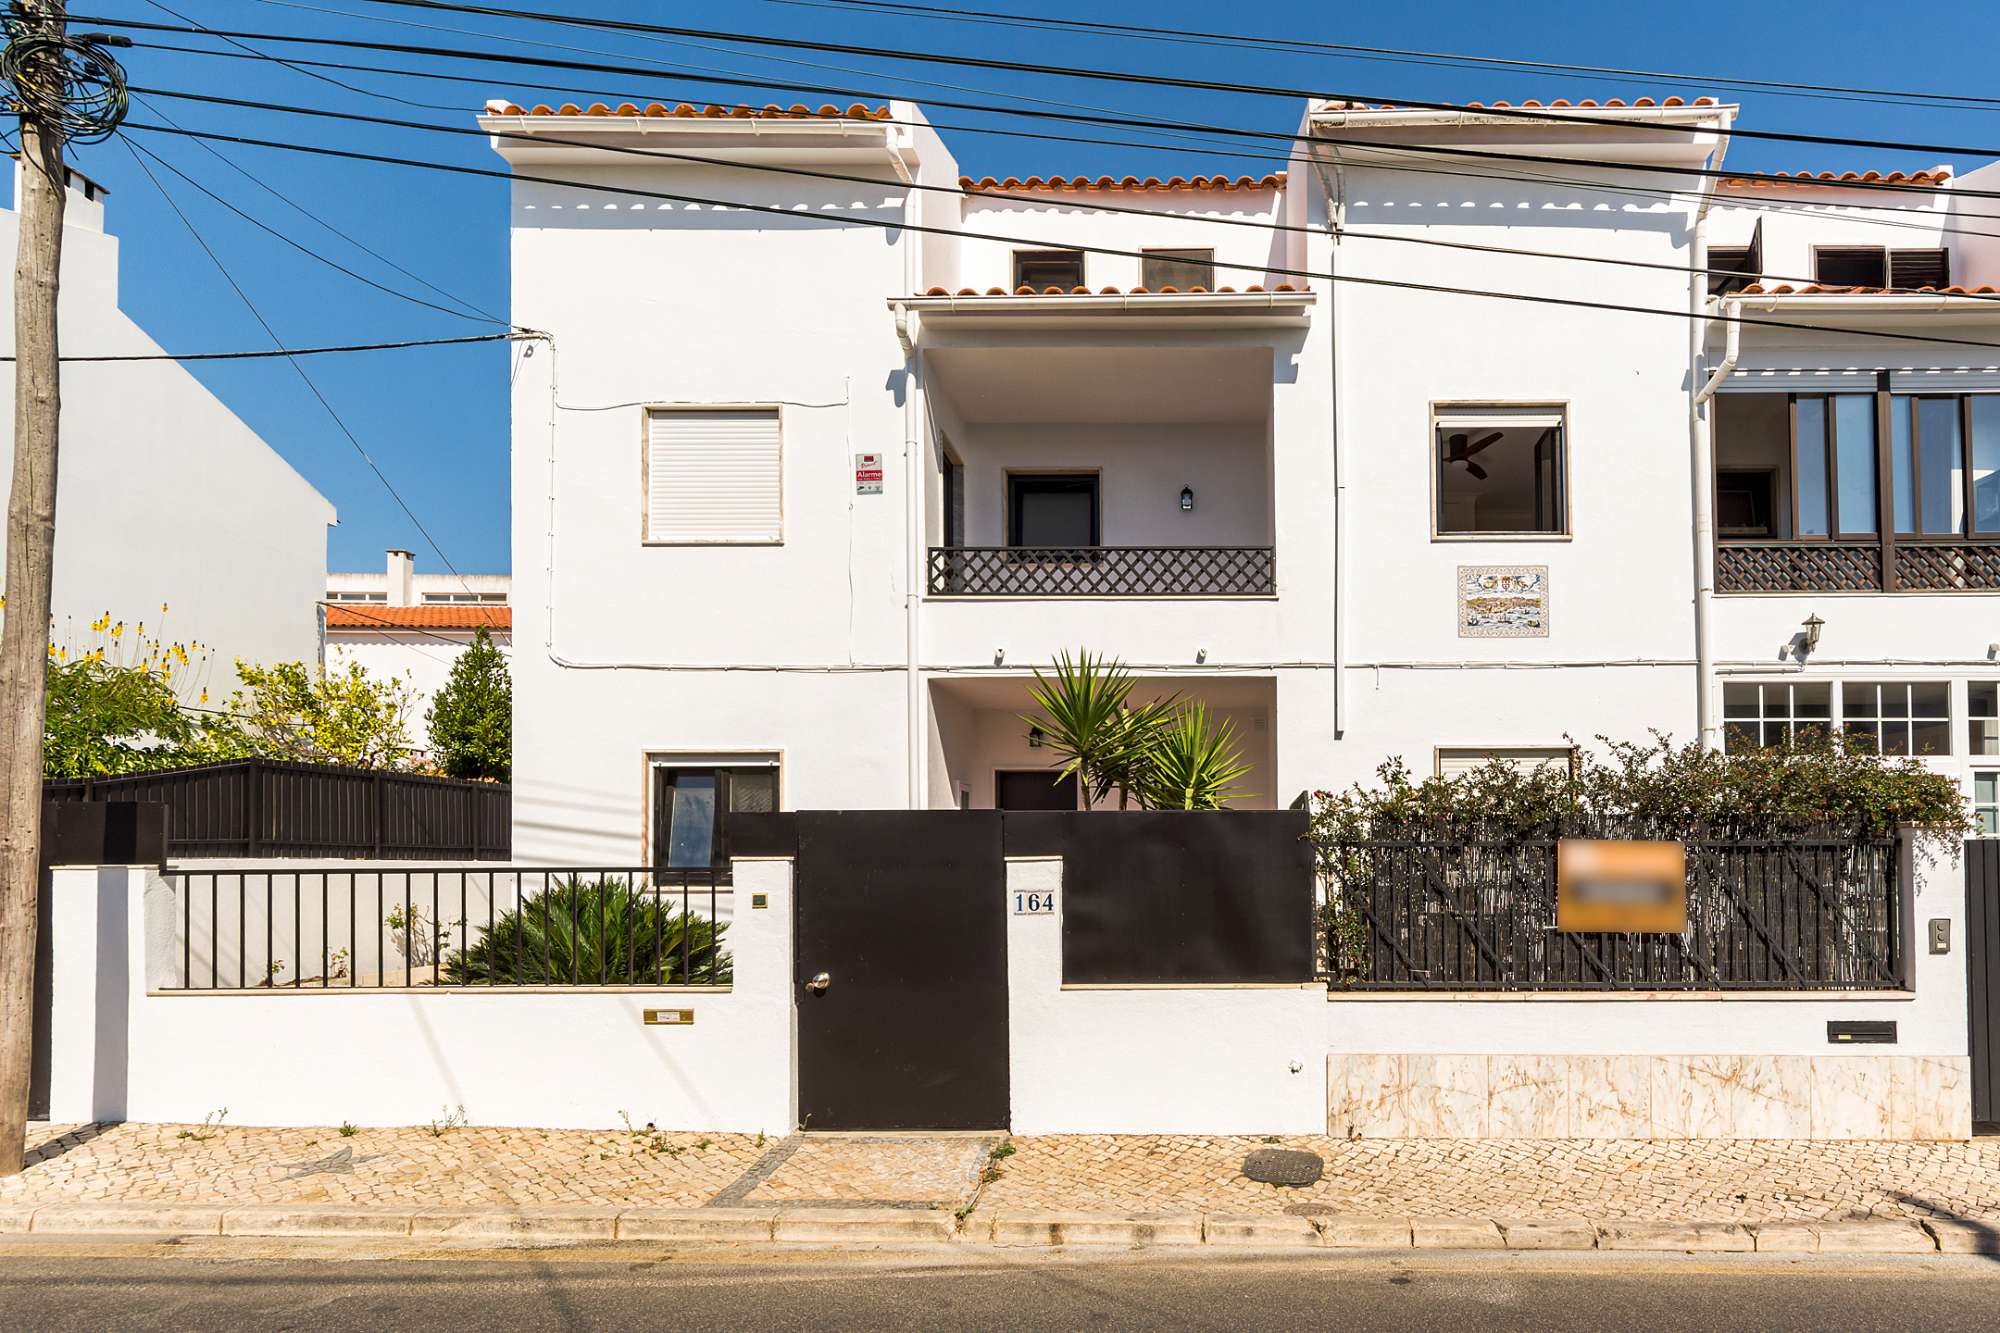 3-bedroom villa with parking for rent in Livramento, Estoril